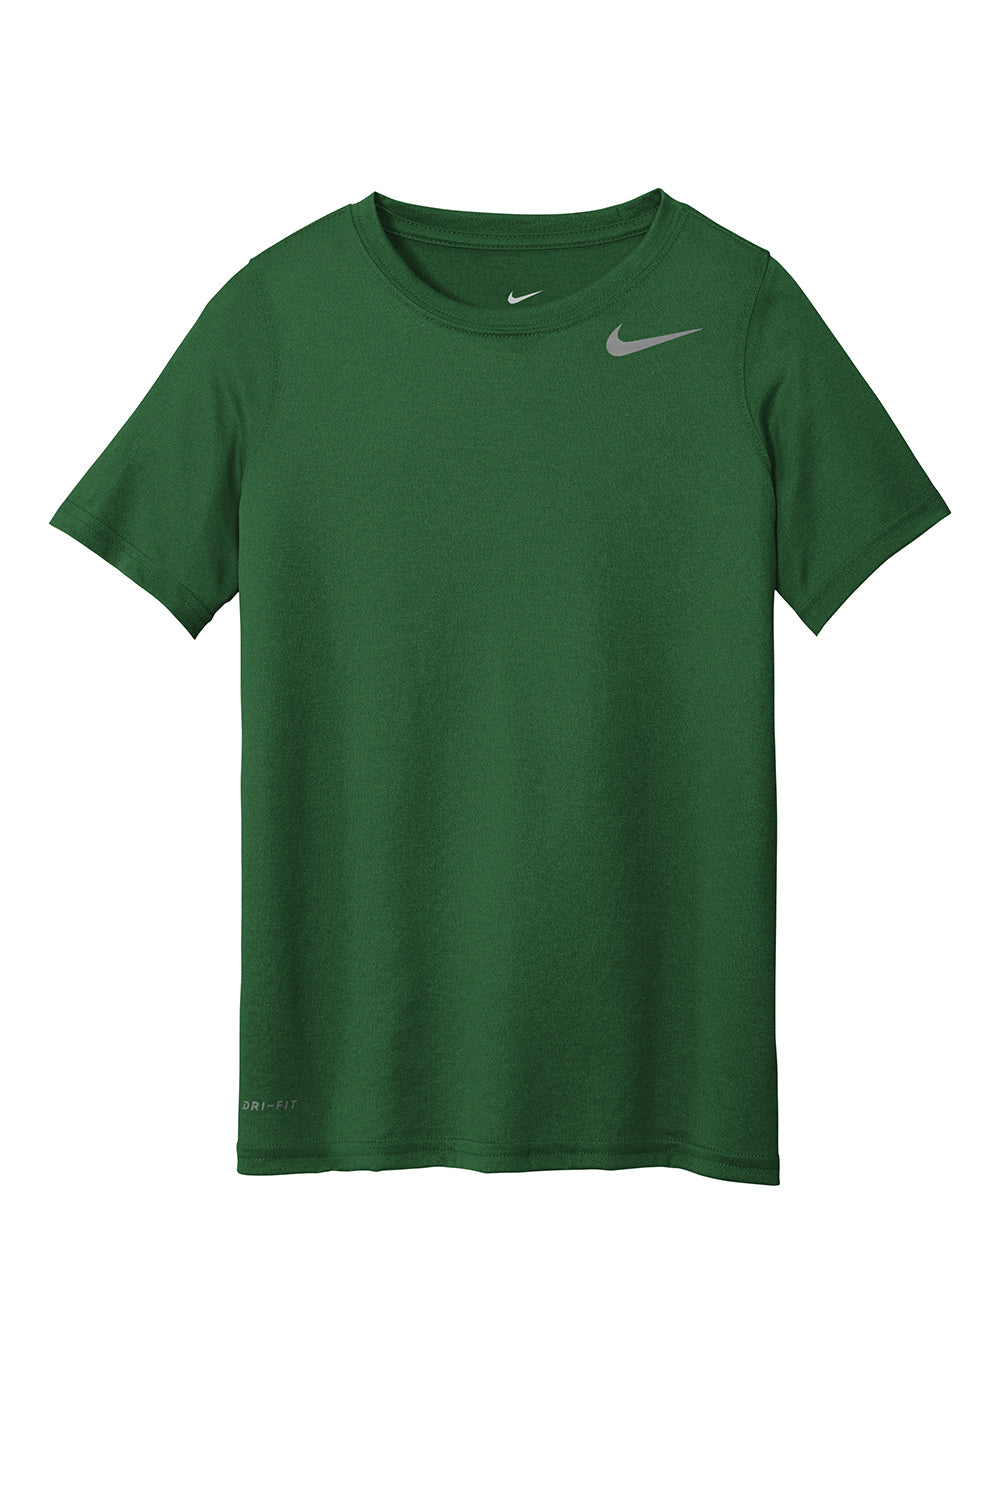 Nike DV7317 Youth Team rLegend Dri-Fit Moisure Wicking Short Sleeve Crewneck T-Shirt Gorge Green Flat Front